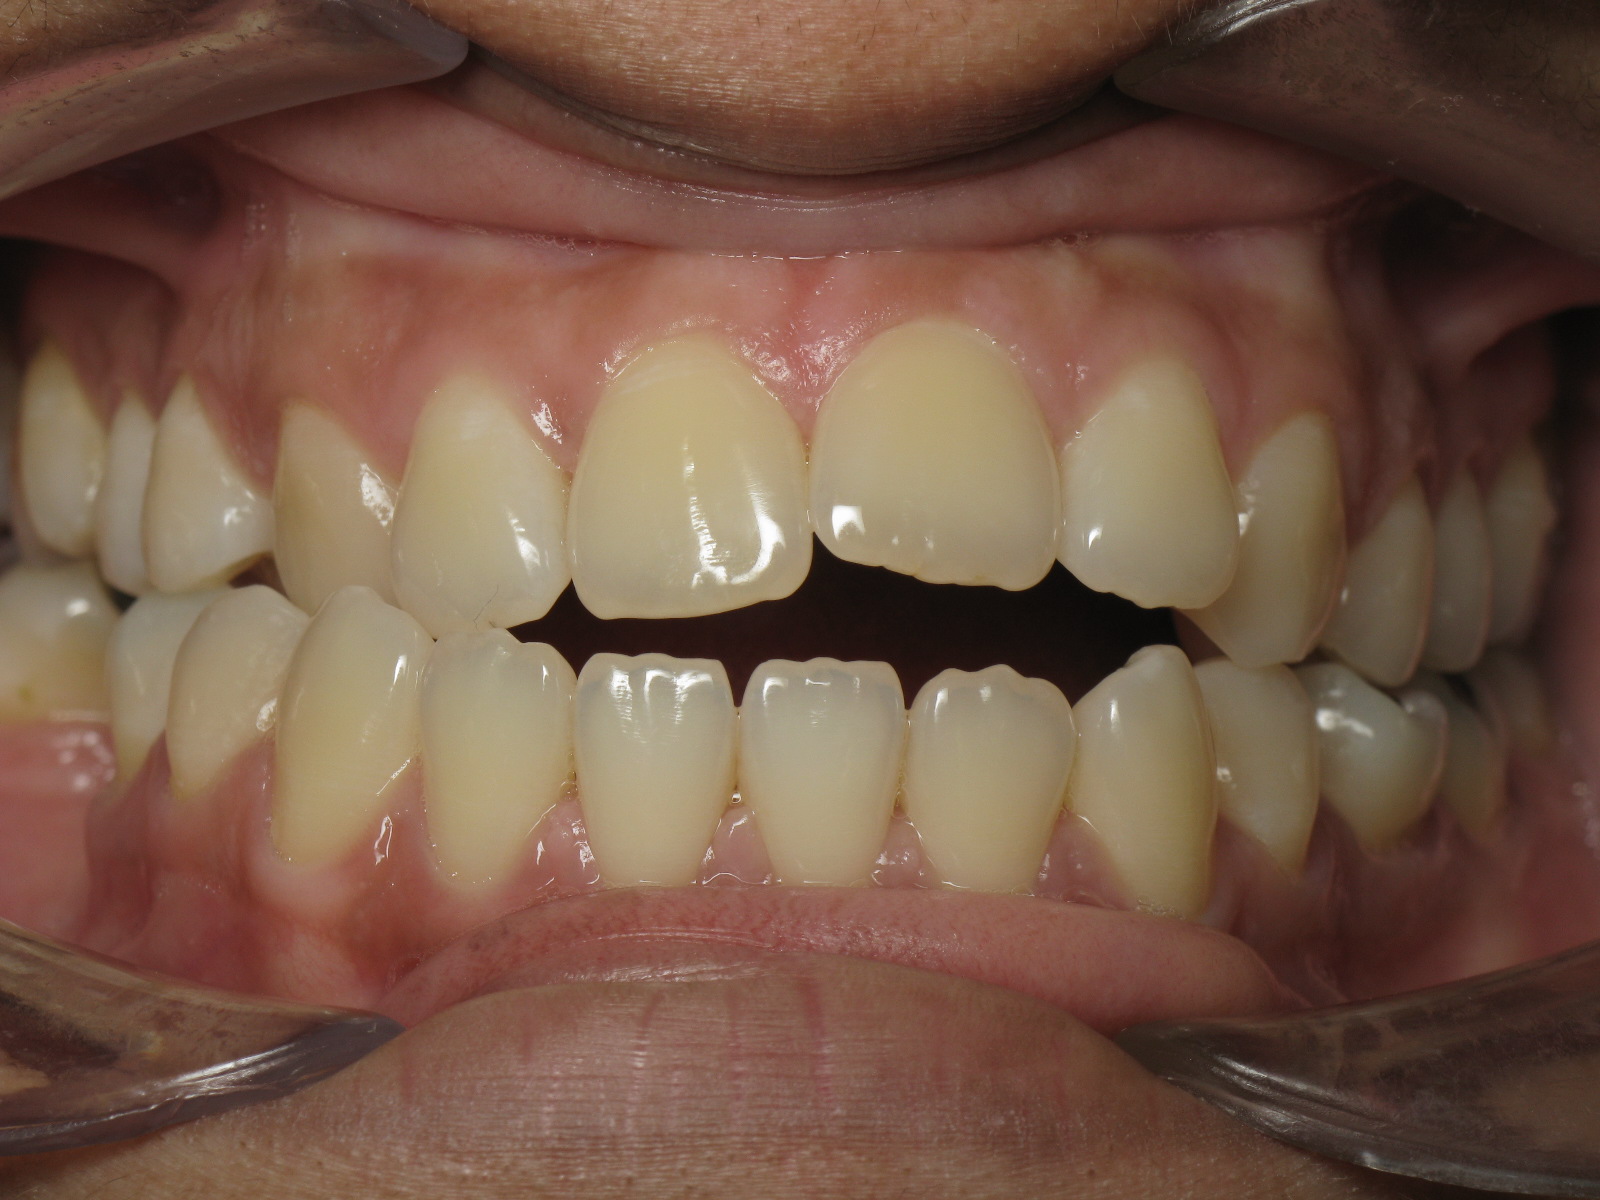 Orthodontic Treatment Case Study